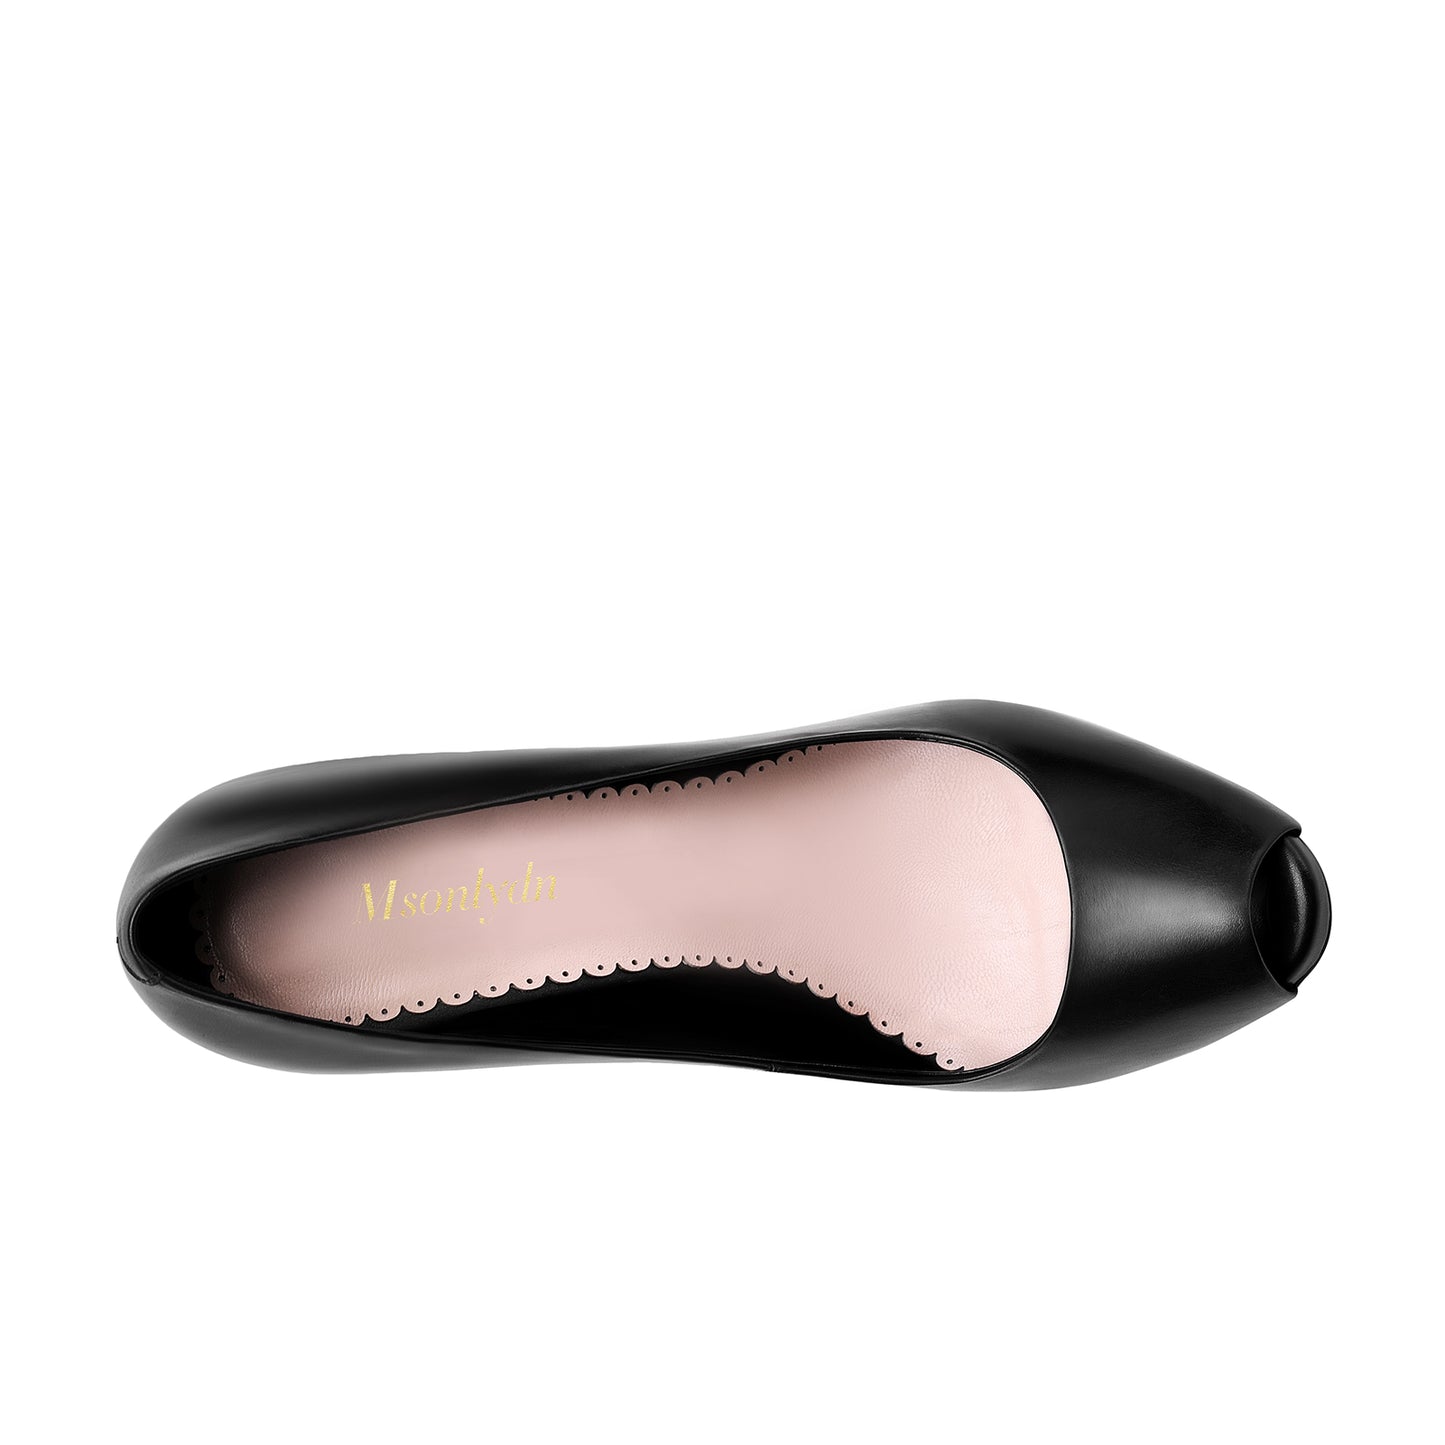 Comfortable & Classy Peep Toe Platform High Heel Stiletto Pumps for Women - Dressy Leather Heels